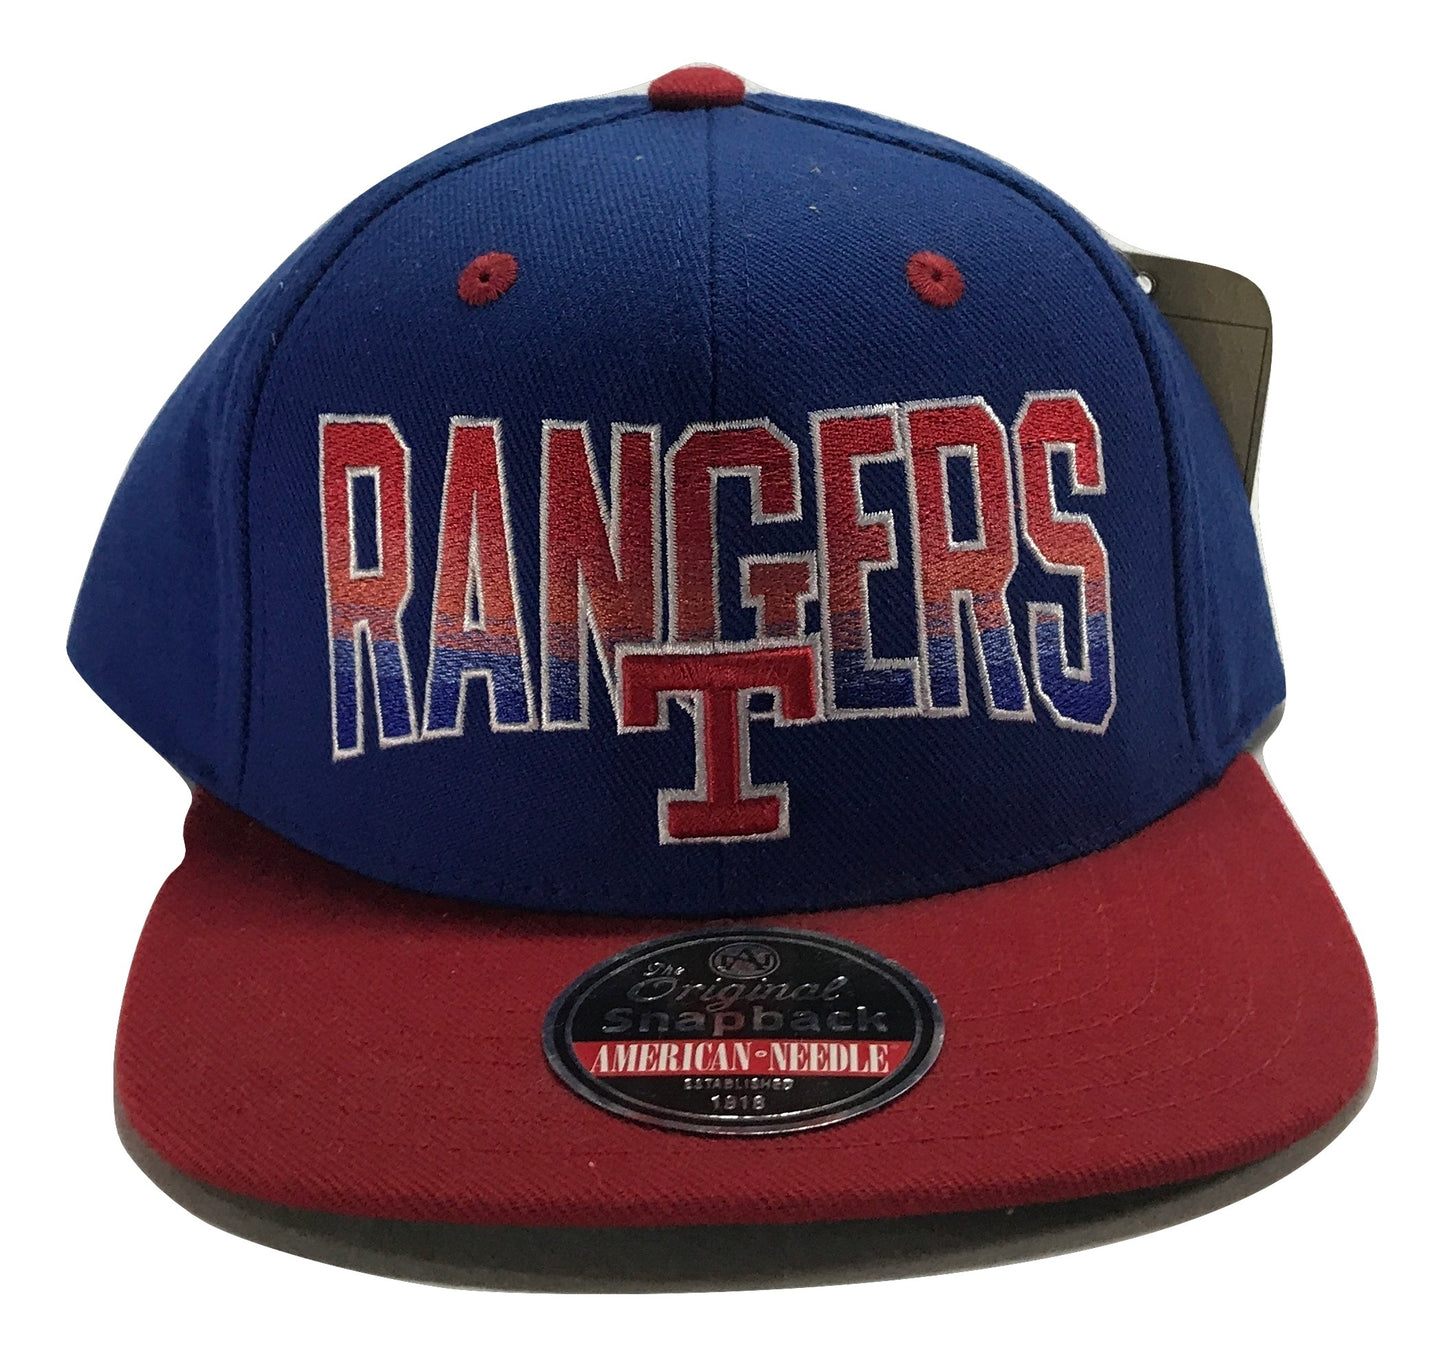 Texas Rangers (Blue) Snapback